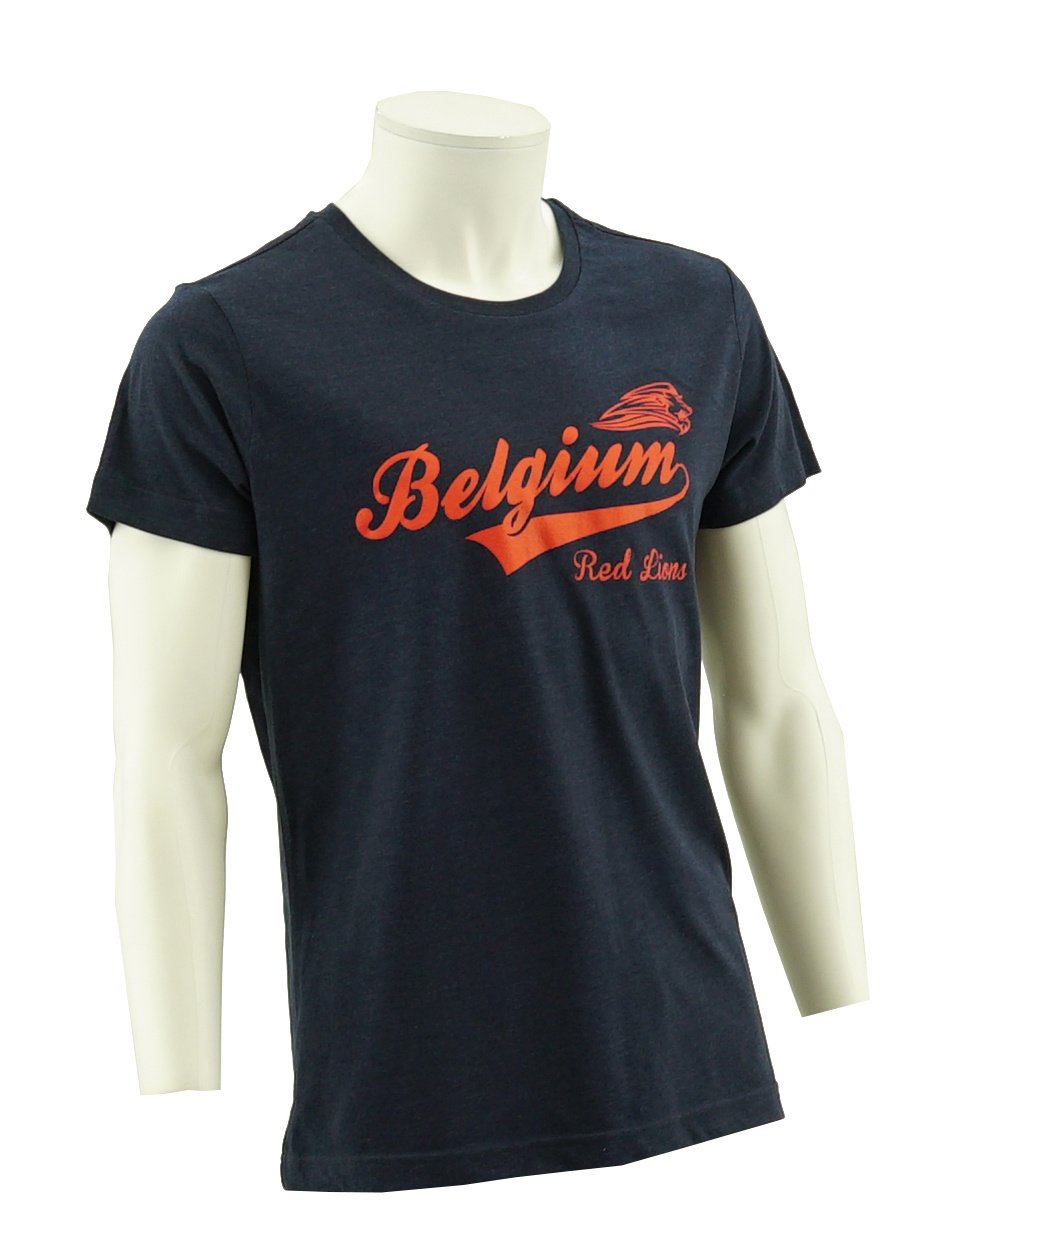 Topfanz T-shirt Belgian Red lions